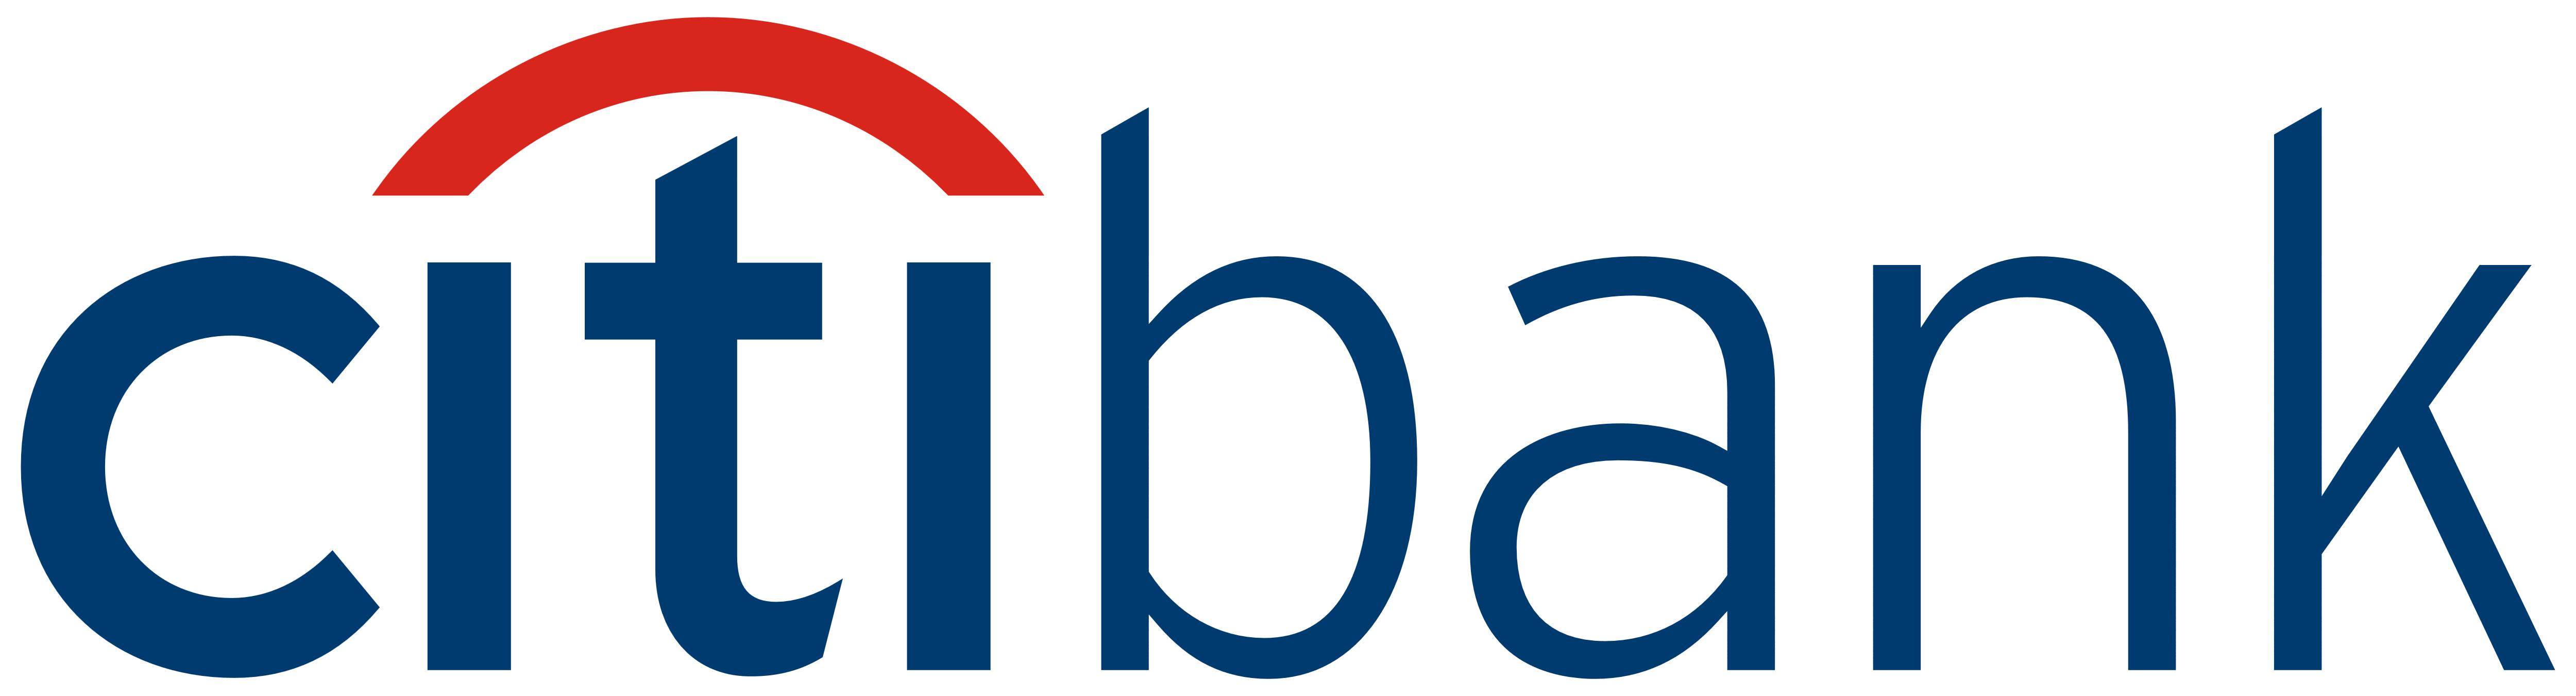 Citibank Logo Background PNG Image